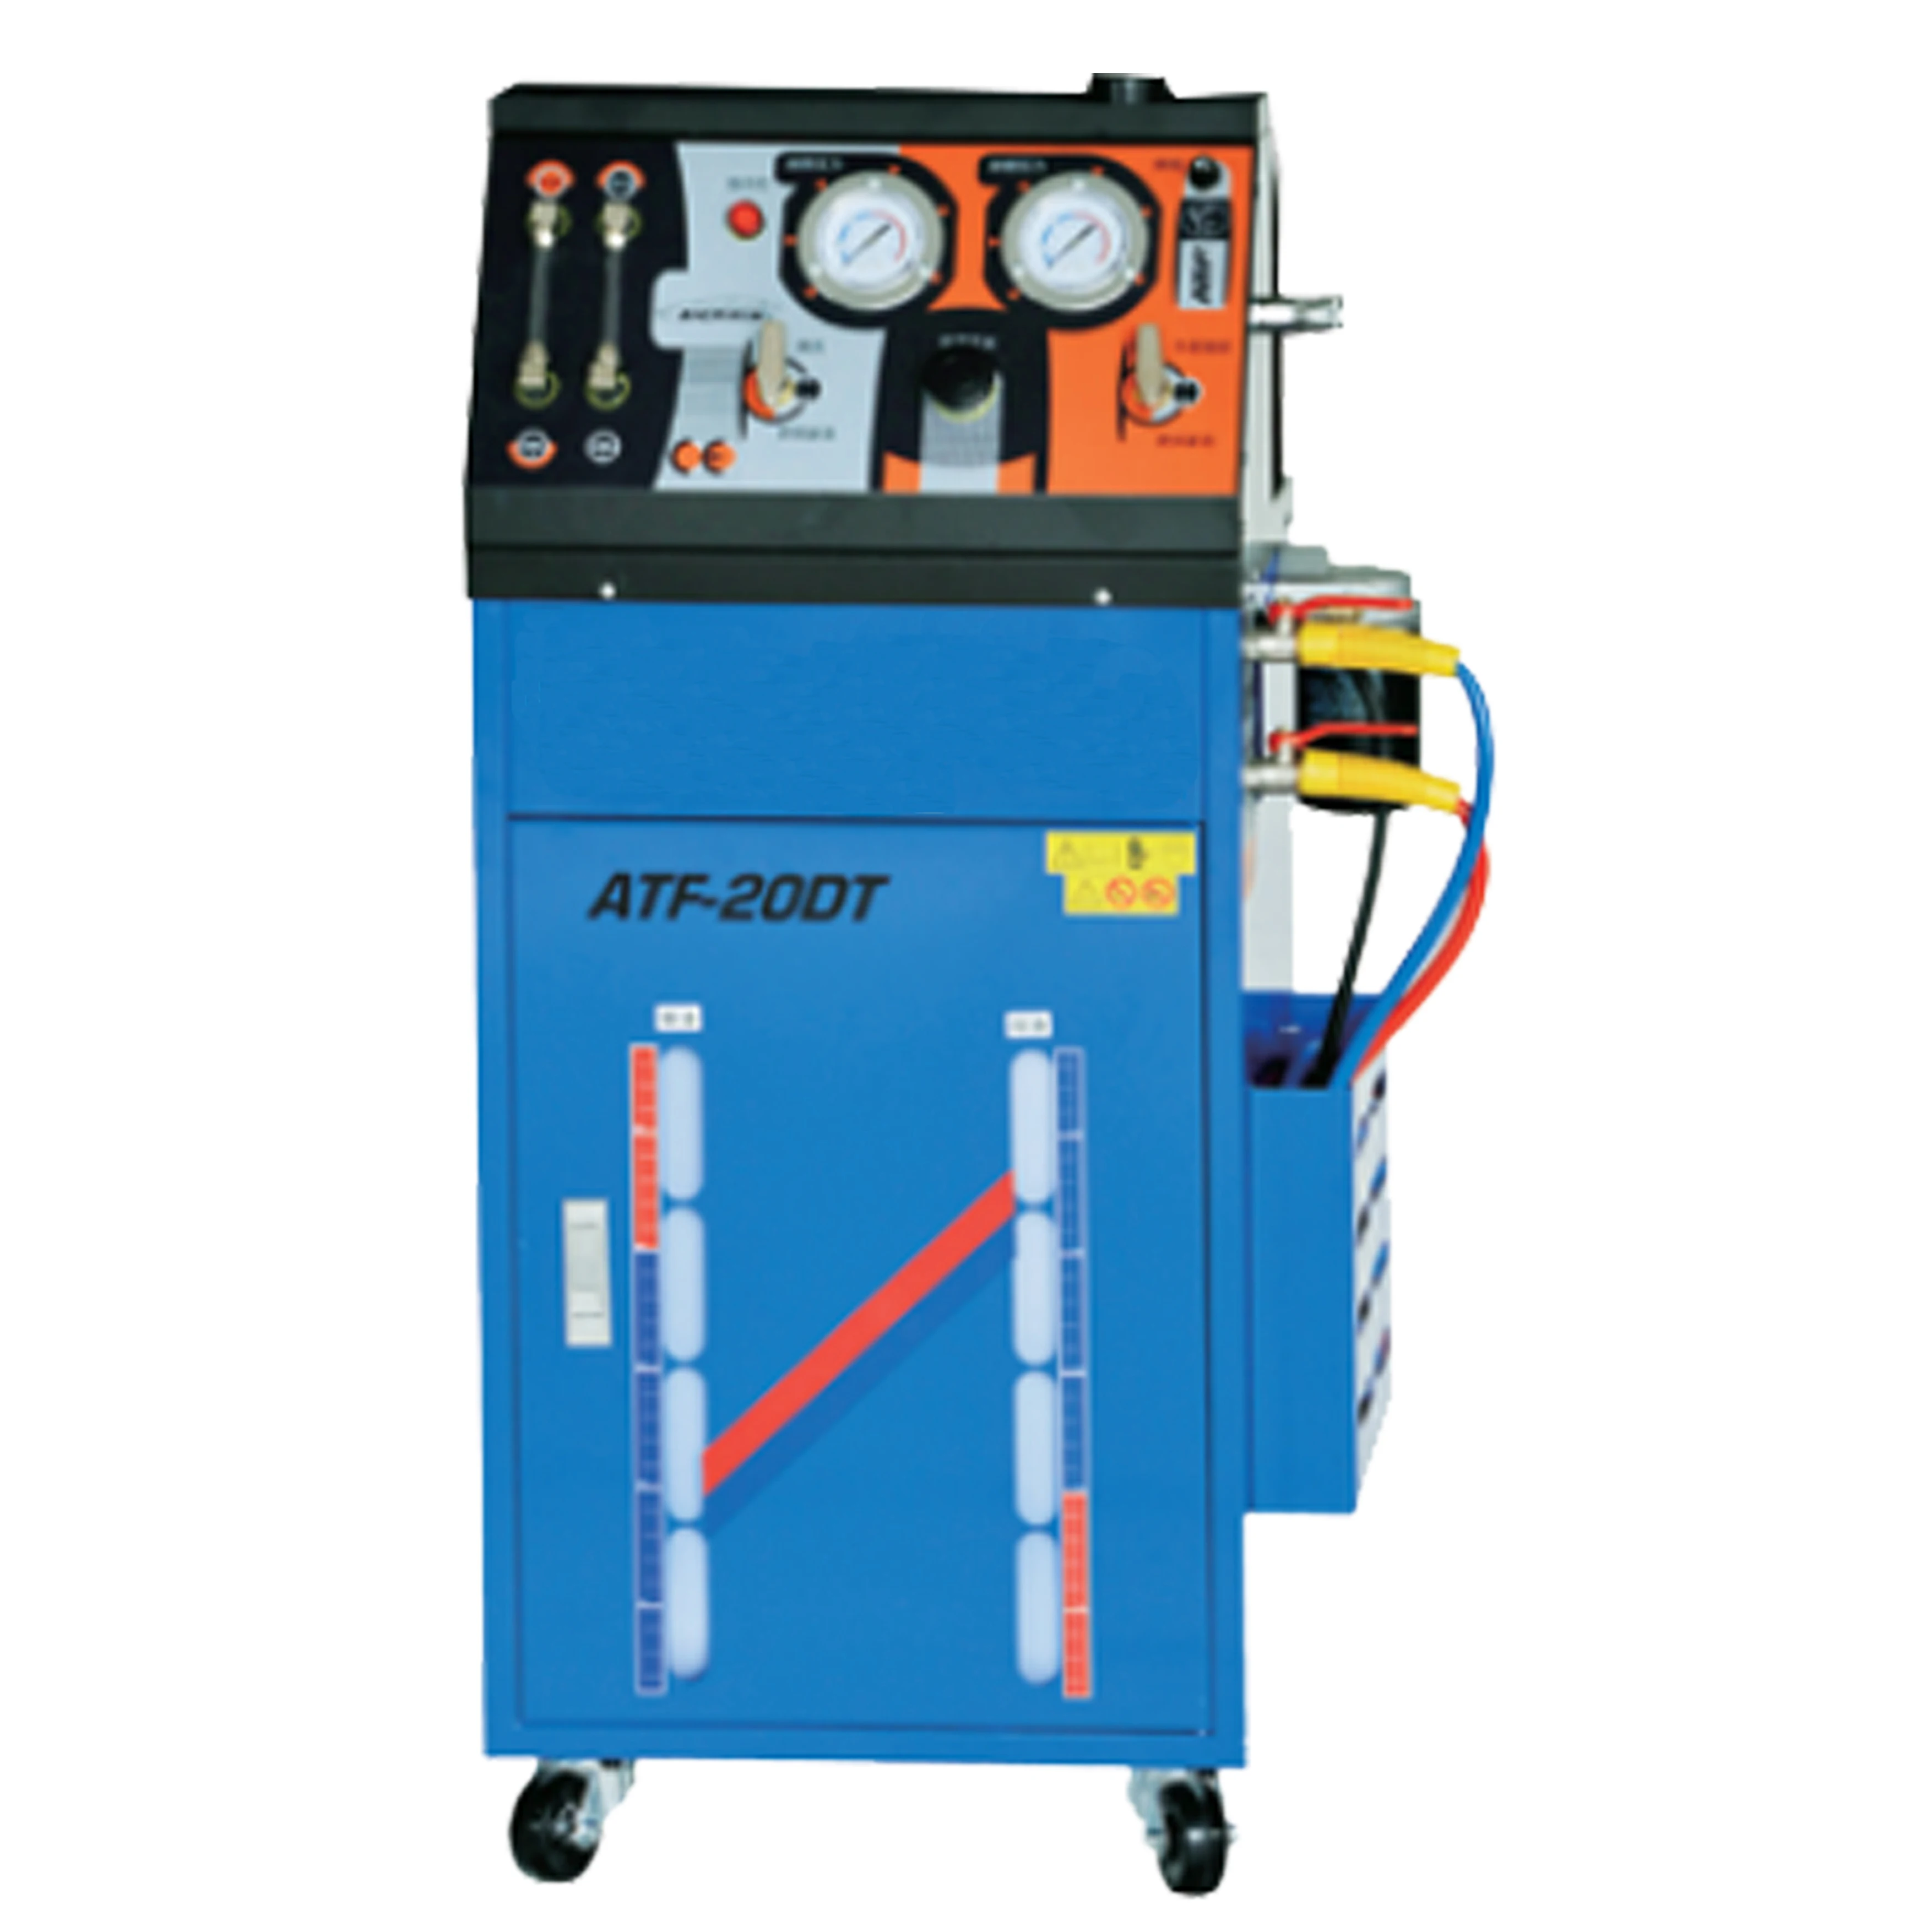 

hot sale ATF machine, Auto-transmission Gasoline/Diesel Fluid Oil Exchanger ATF-20DT factory price